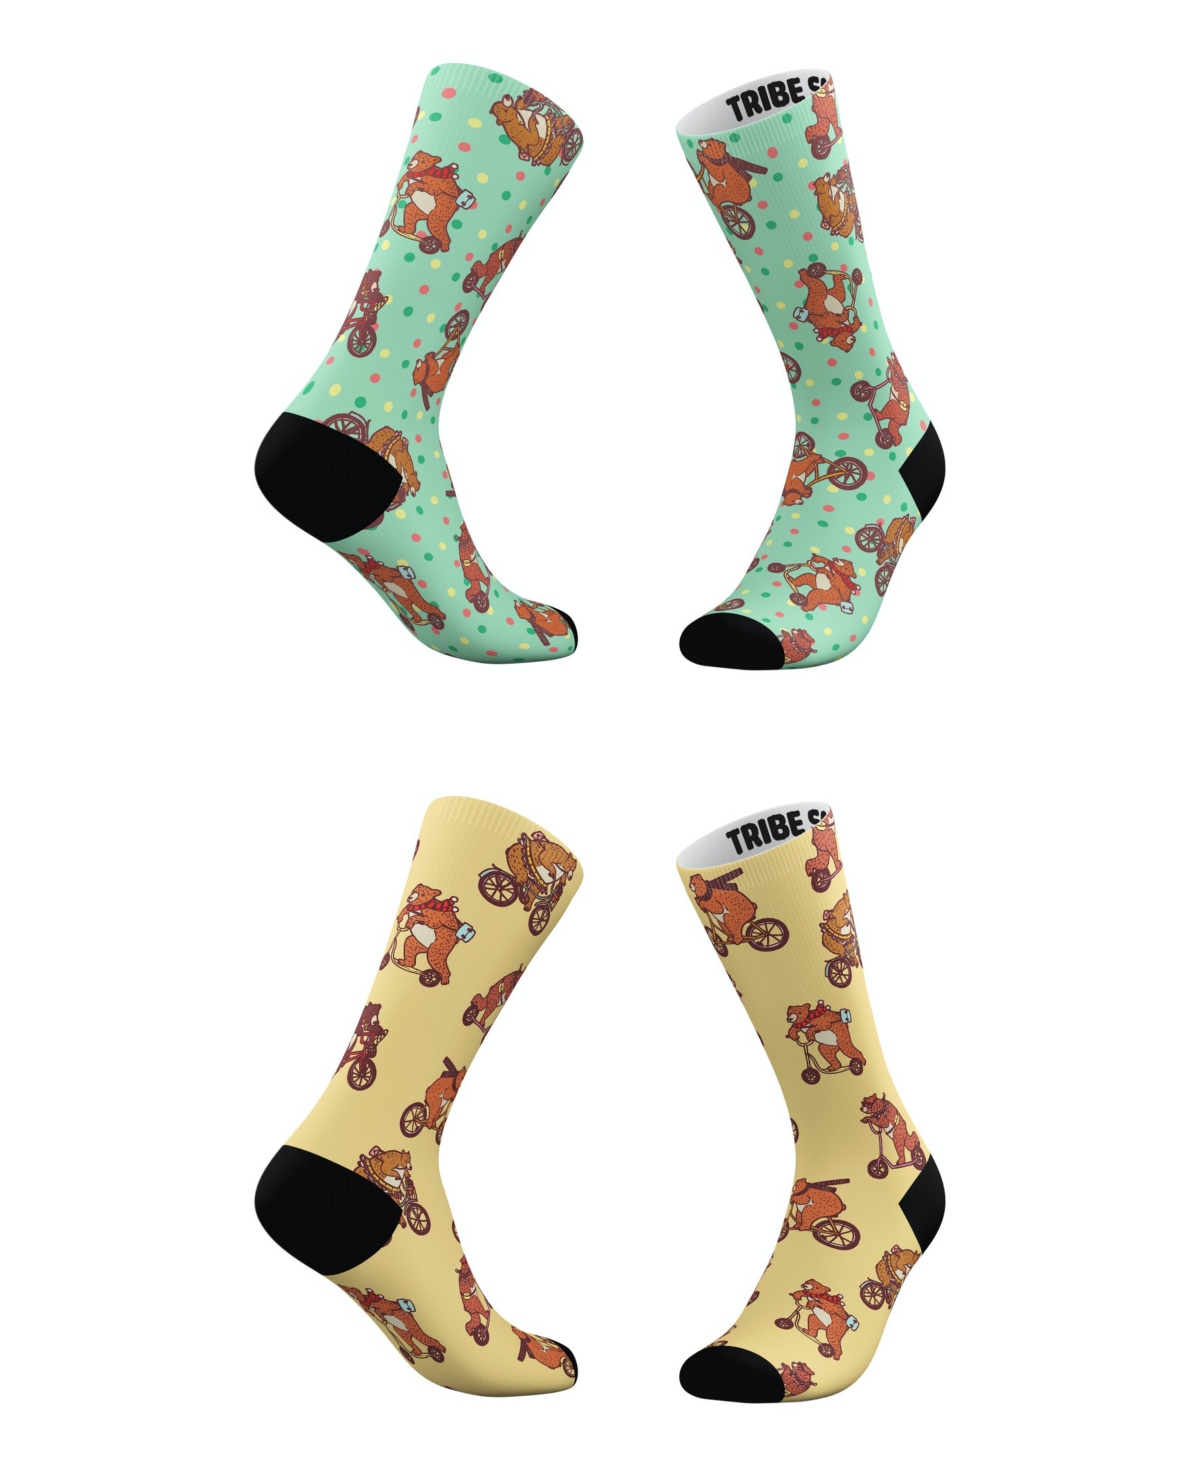 Men's and Women's Hipster Bears Socks, Set of 2 - Assorted Pre-Pack